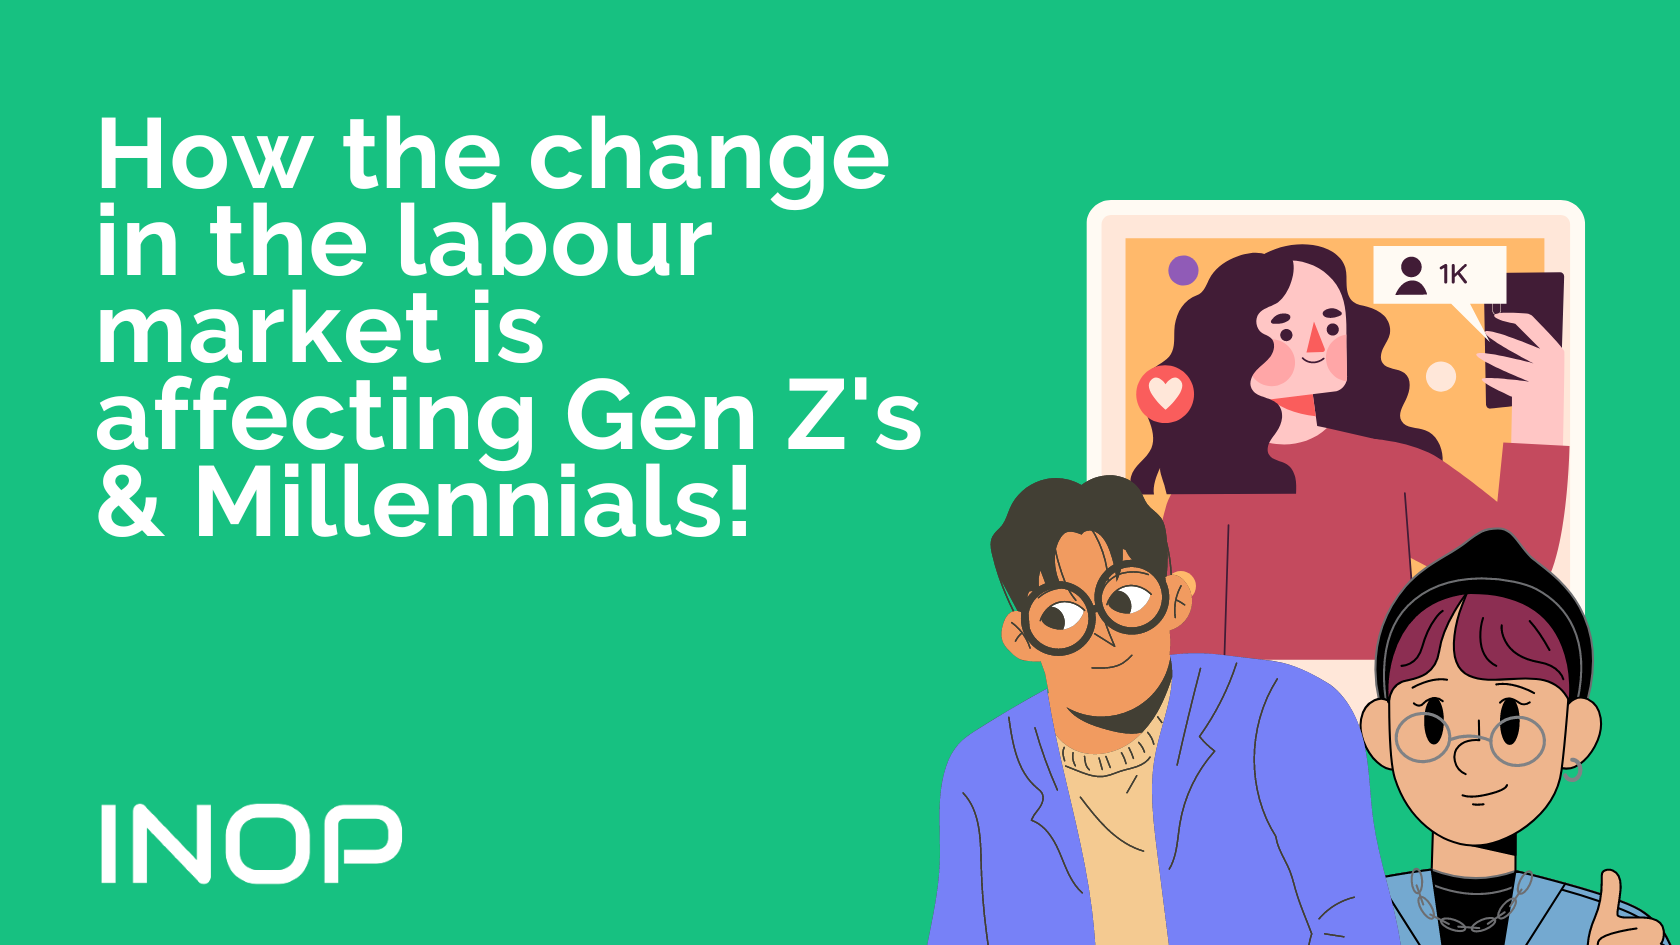 Diverse group of Gen Z and millennials discussing career opportunities